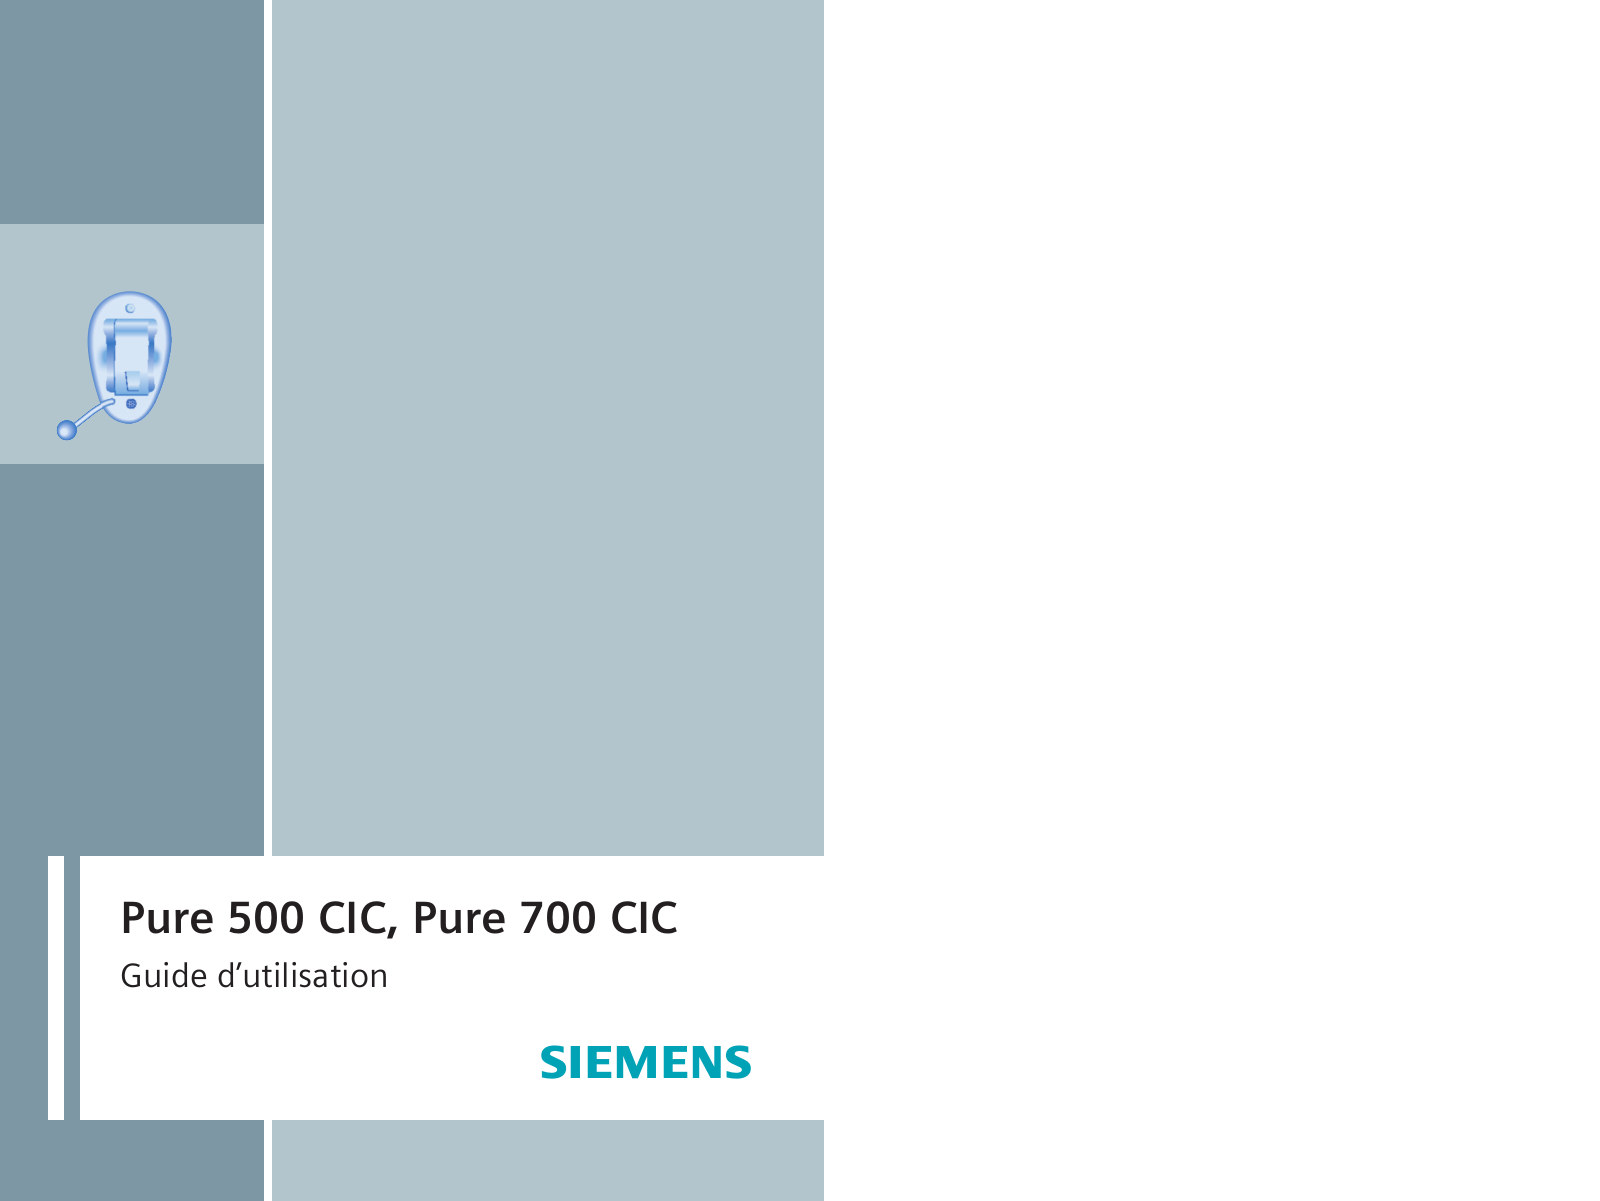 SIEMENS PURE 500 CIC, PURE 700 CIC User Manual